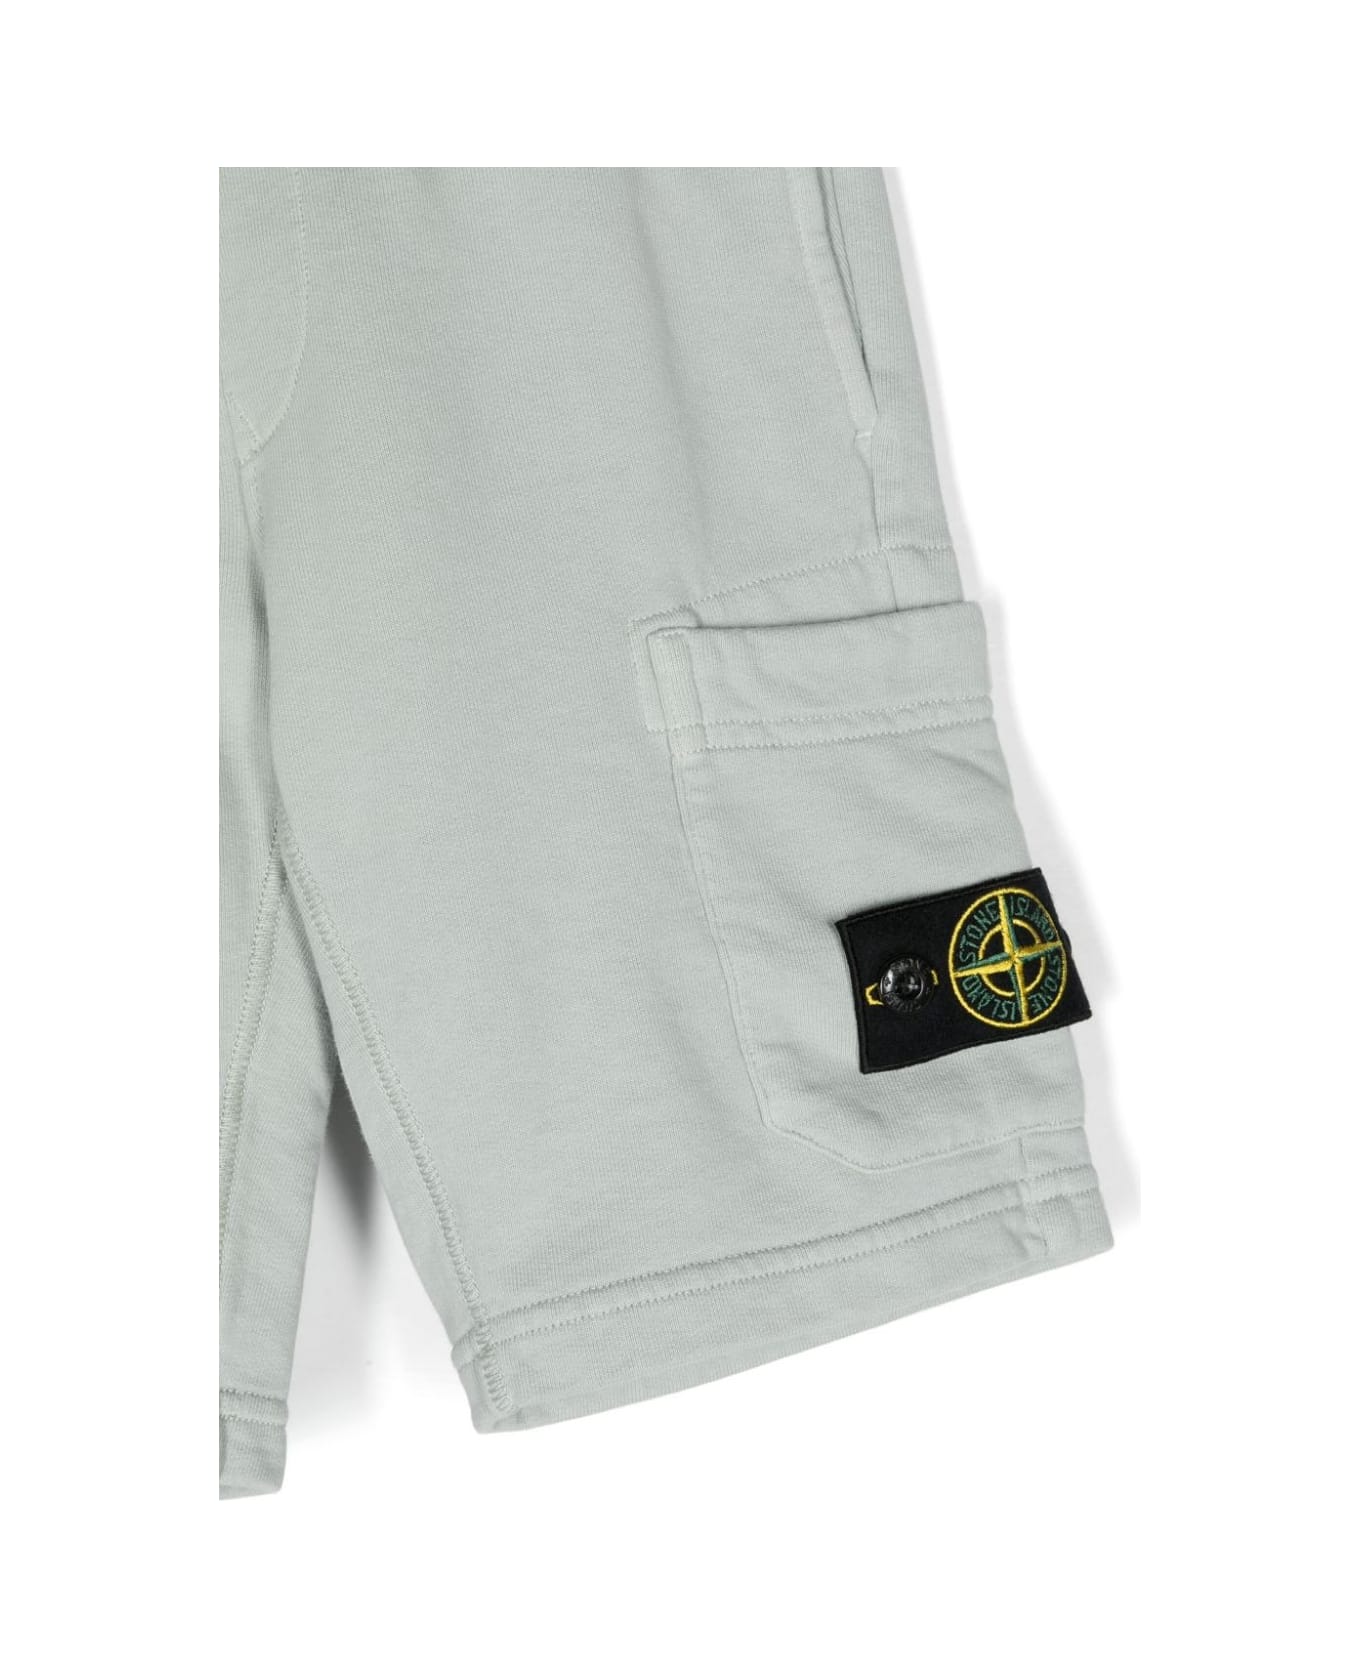 Stone Island Junior Pearl Grey Sports Shorts With Logo - Pearl grey